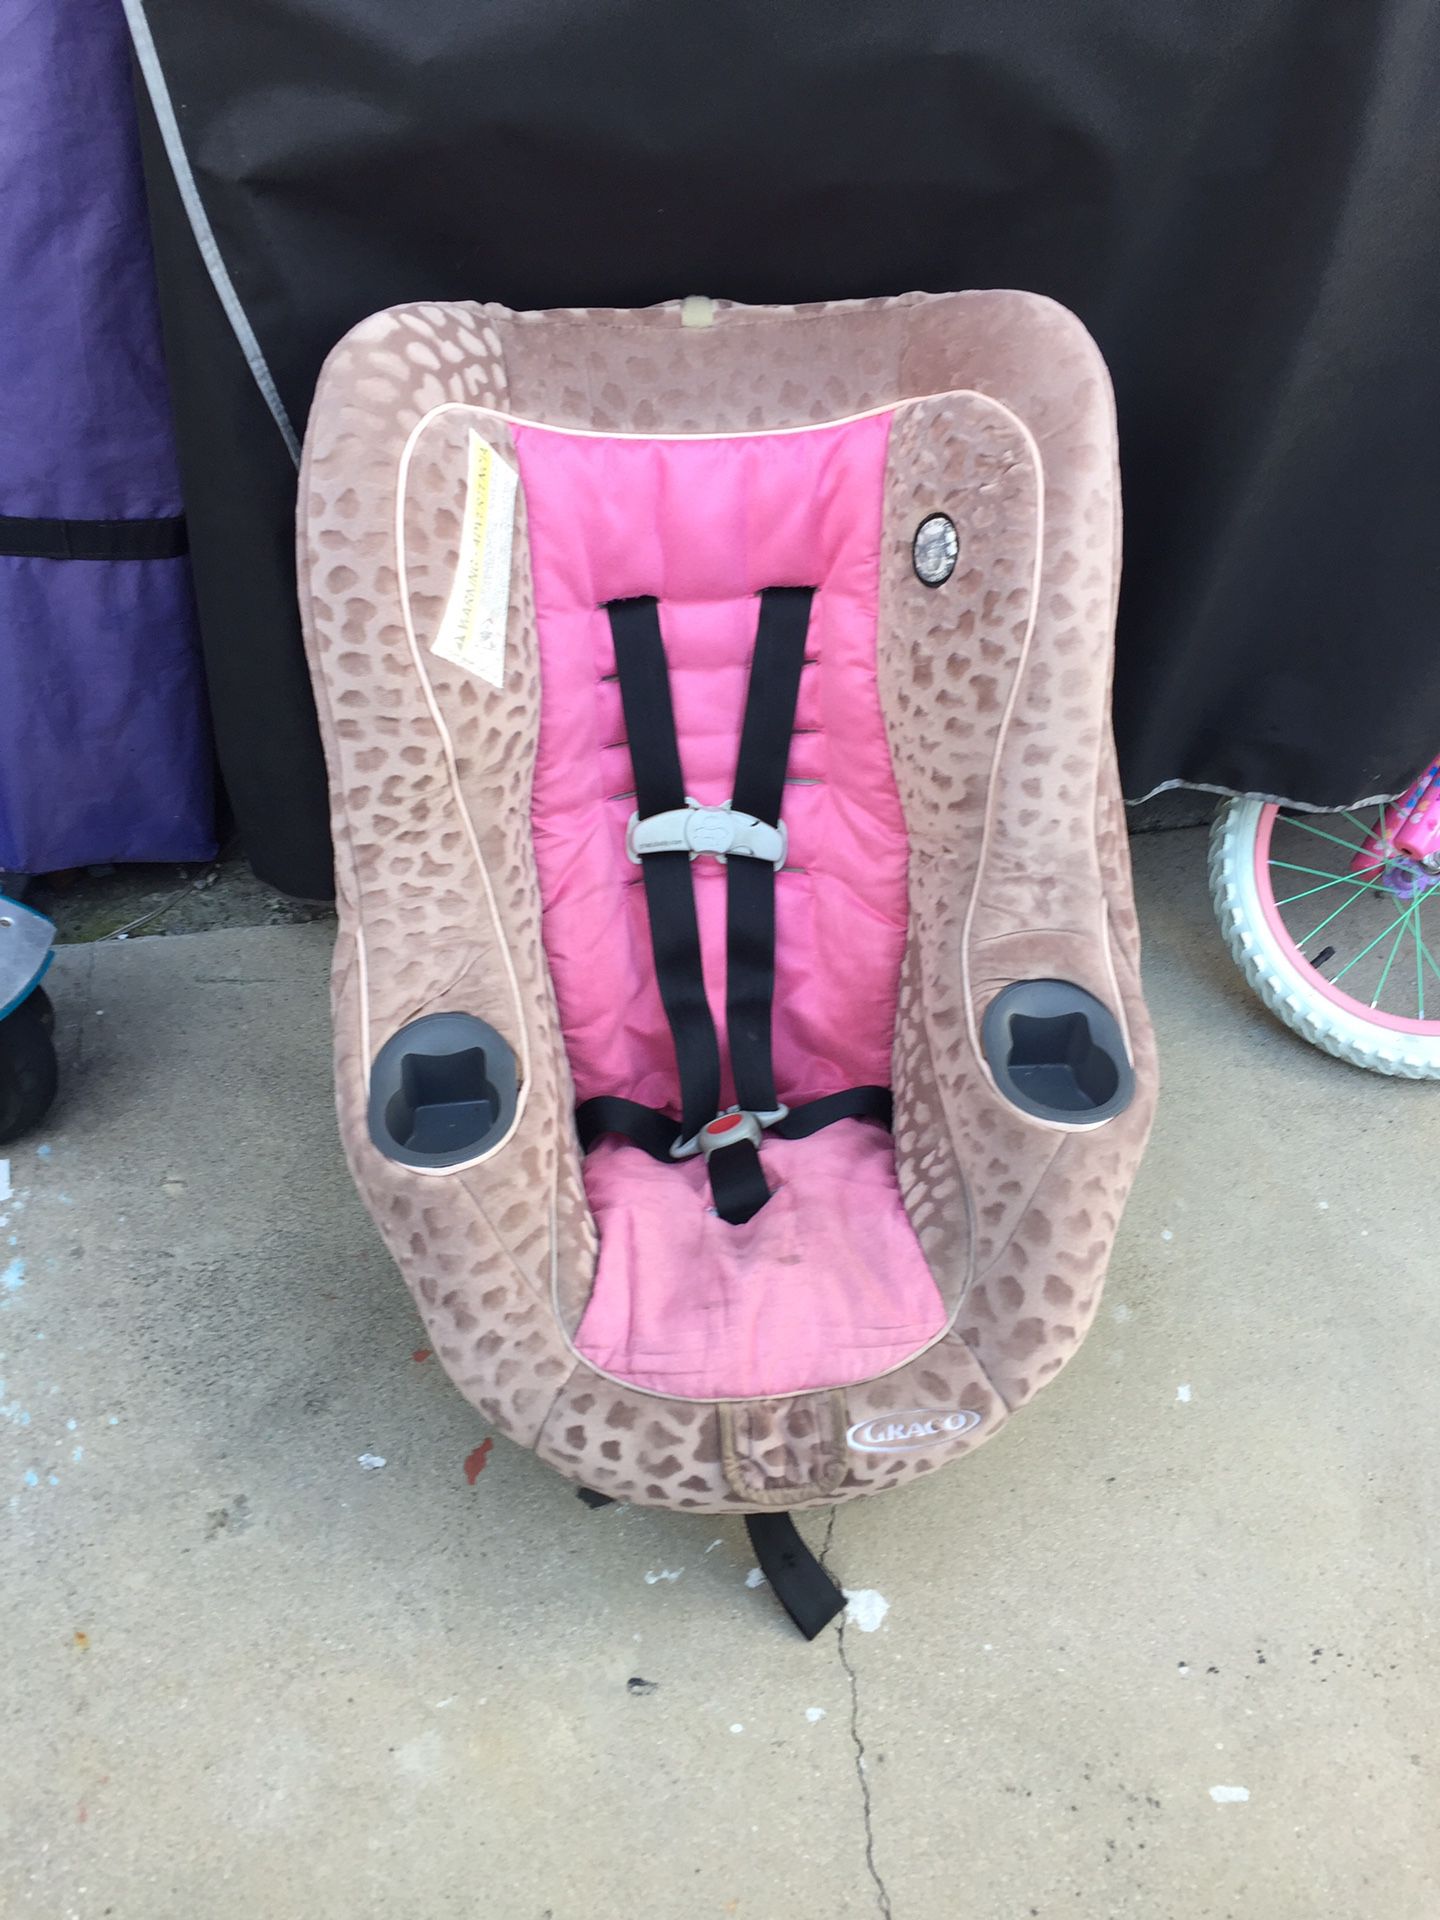 Graco car seat